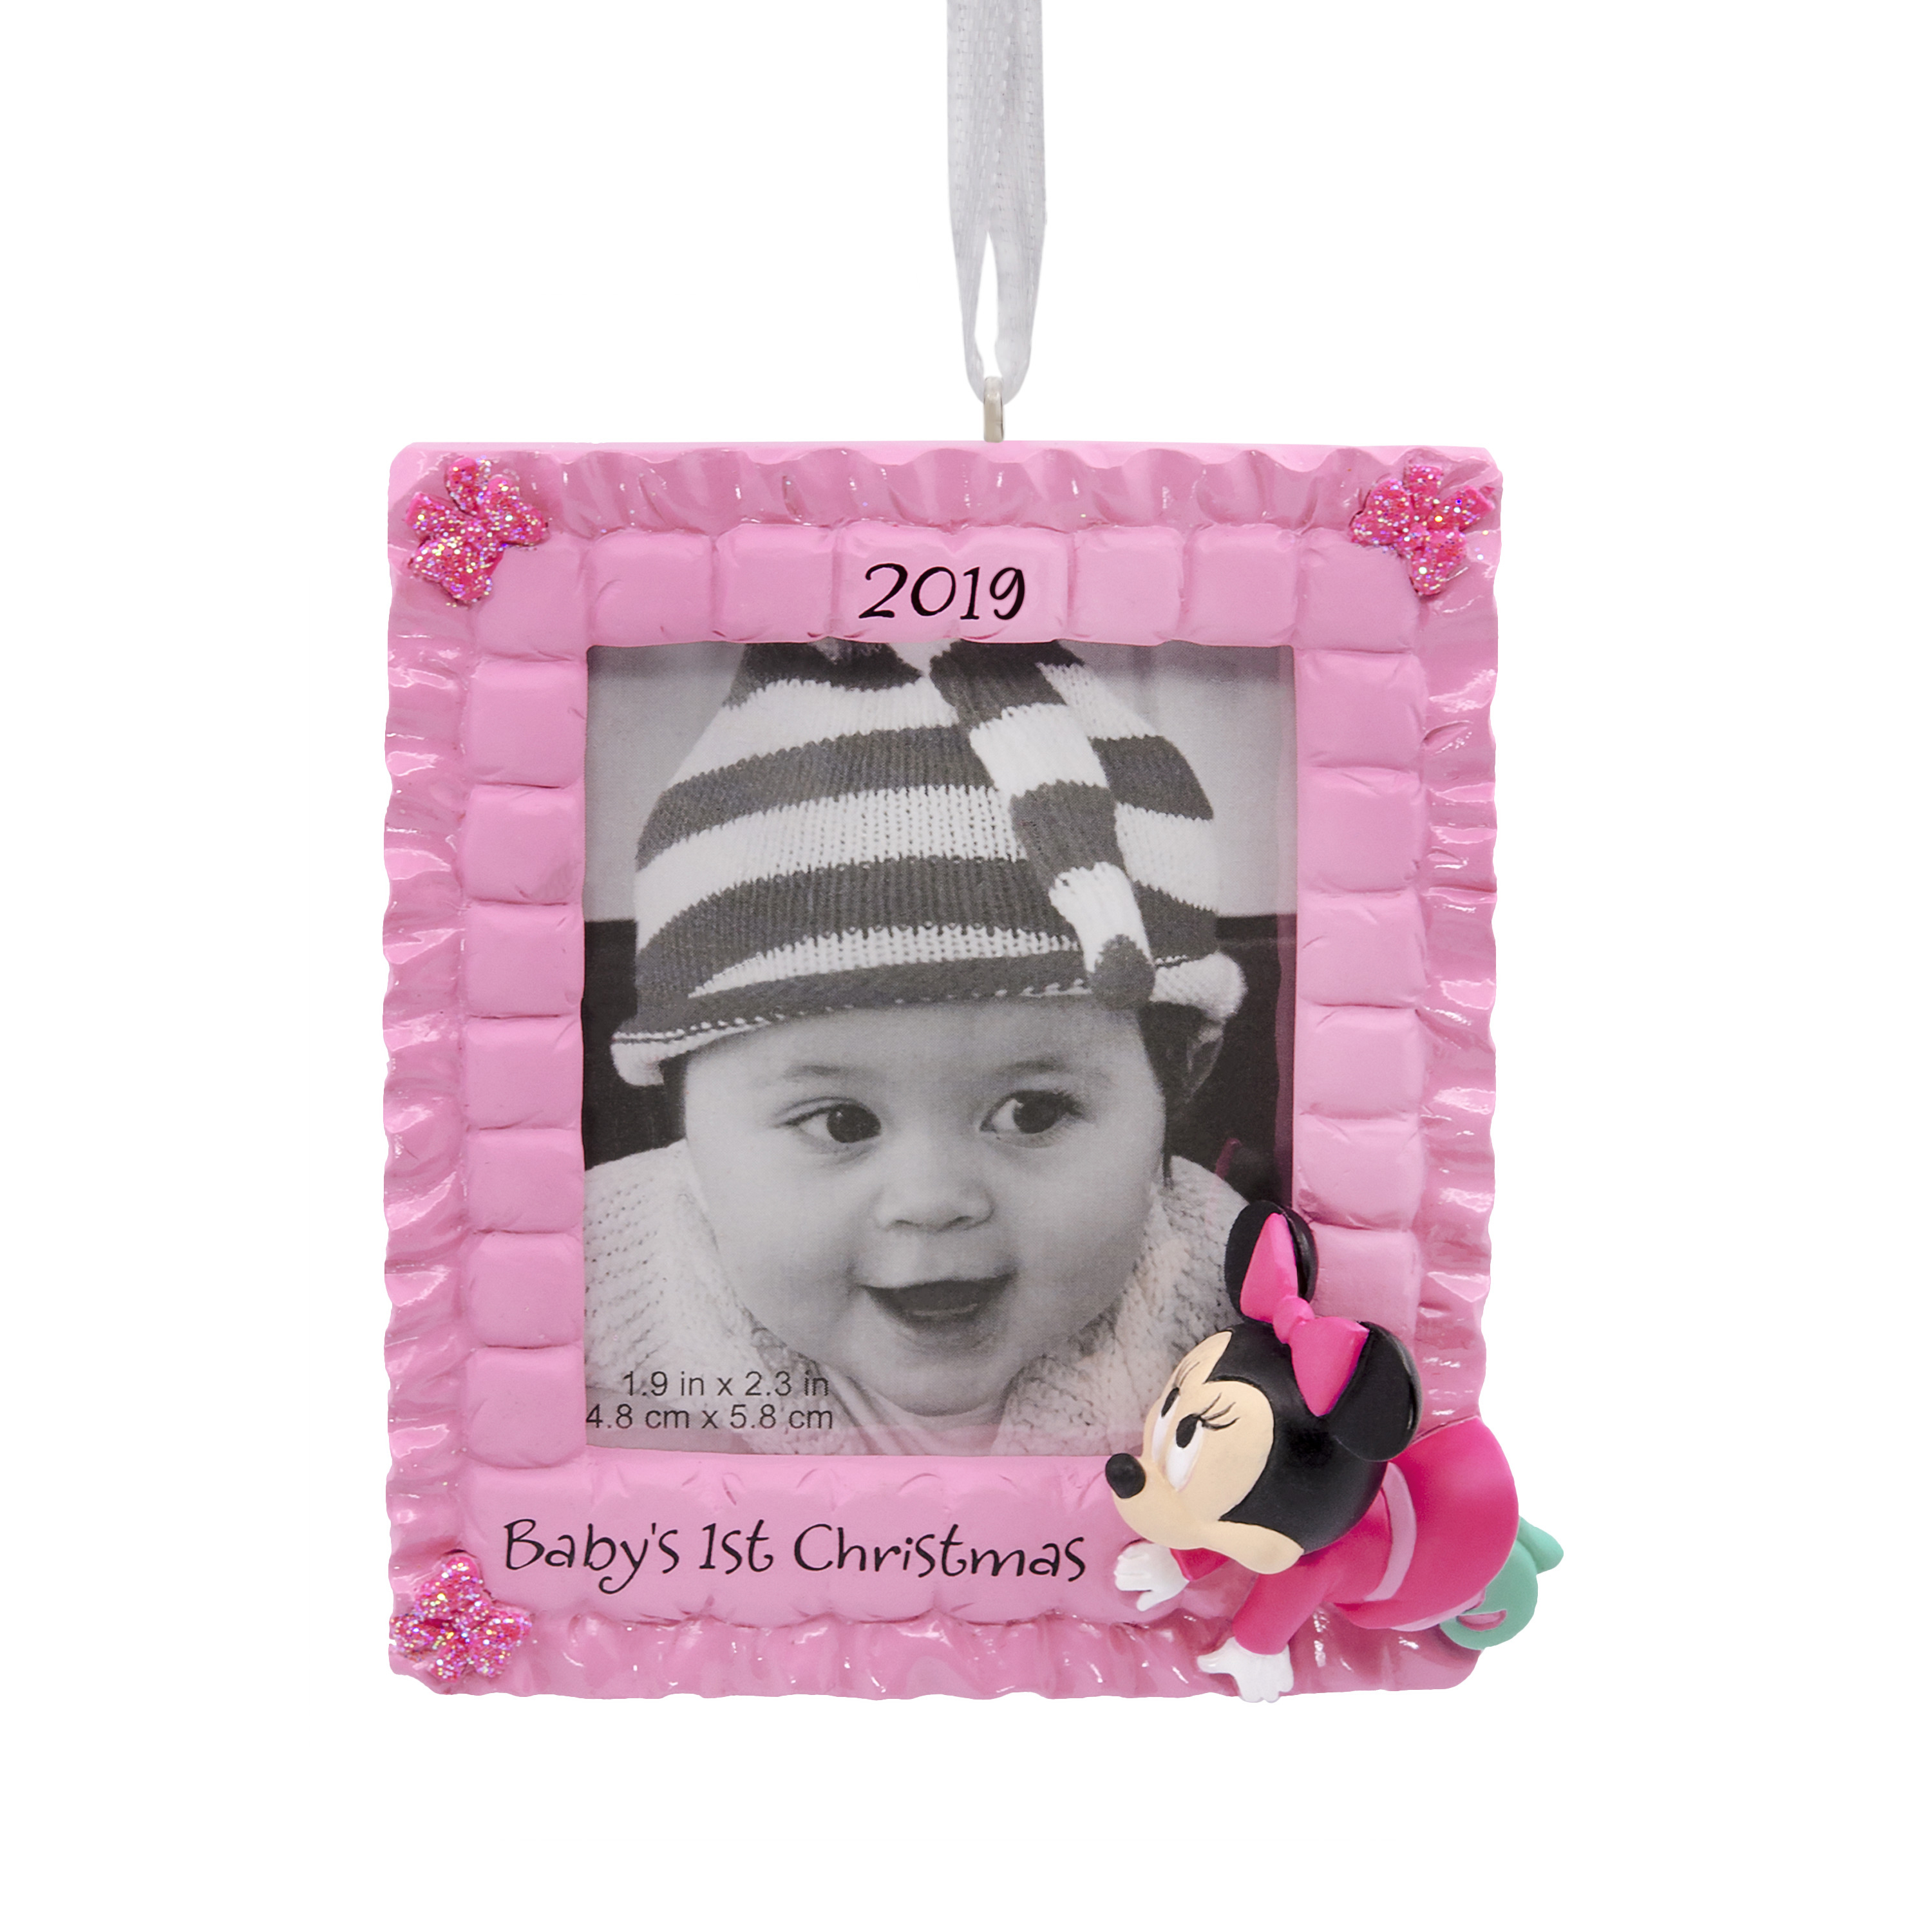 Hallmark Disney's 2019 Minnie Mouse Baby's 1st Christmas Christmas Ornaments - image 1 of 6